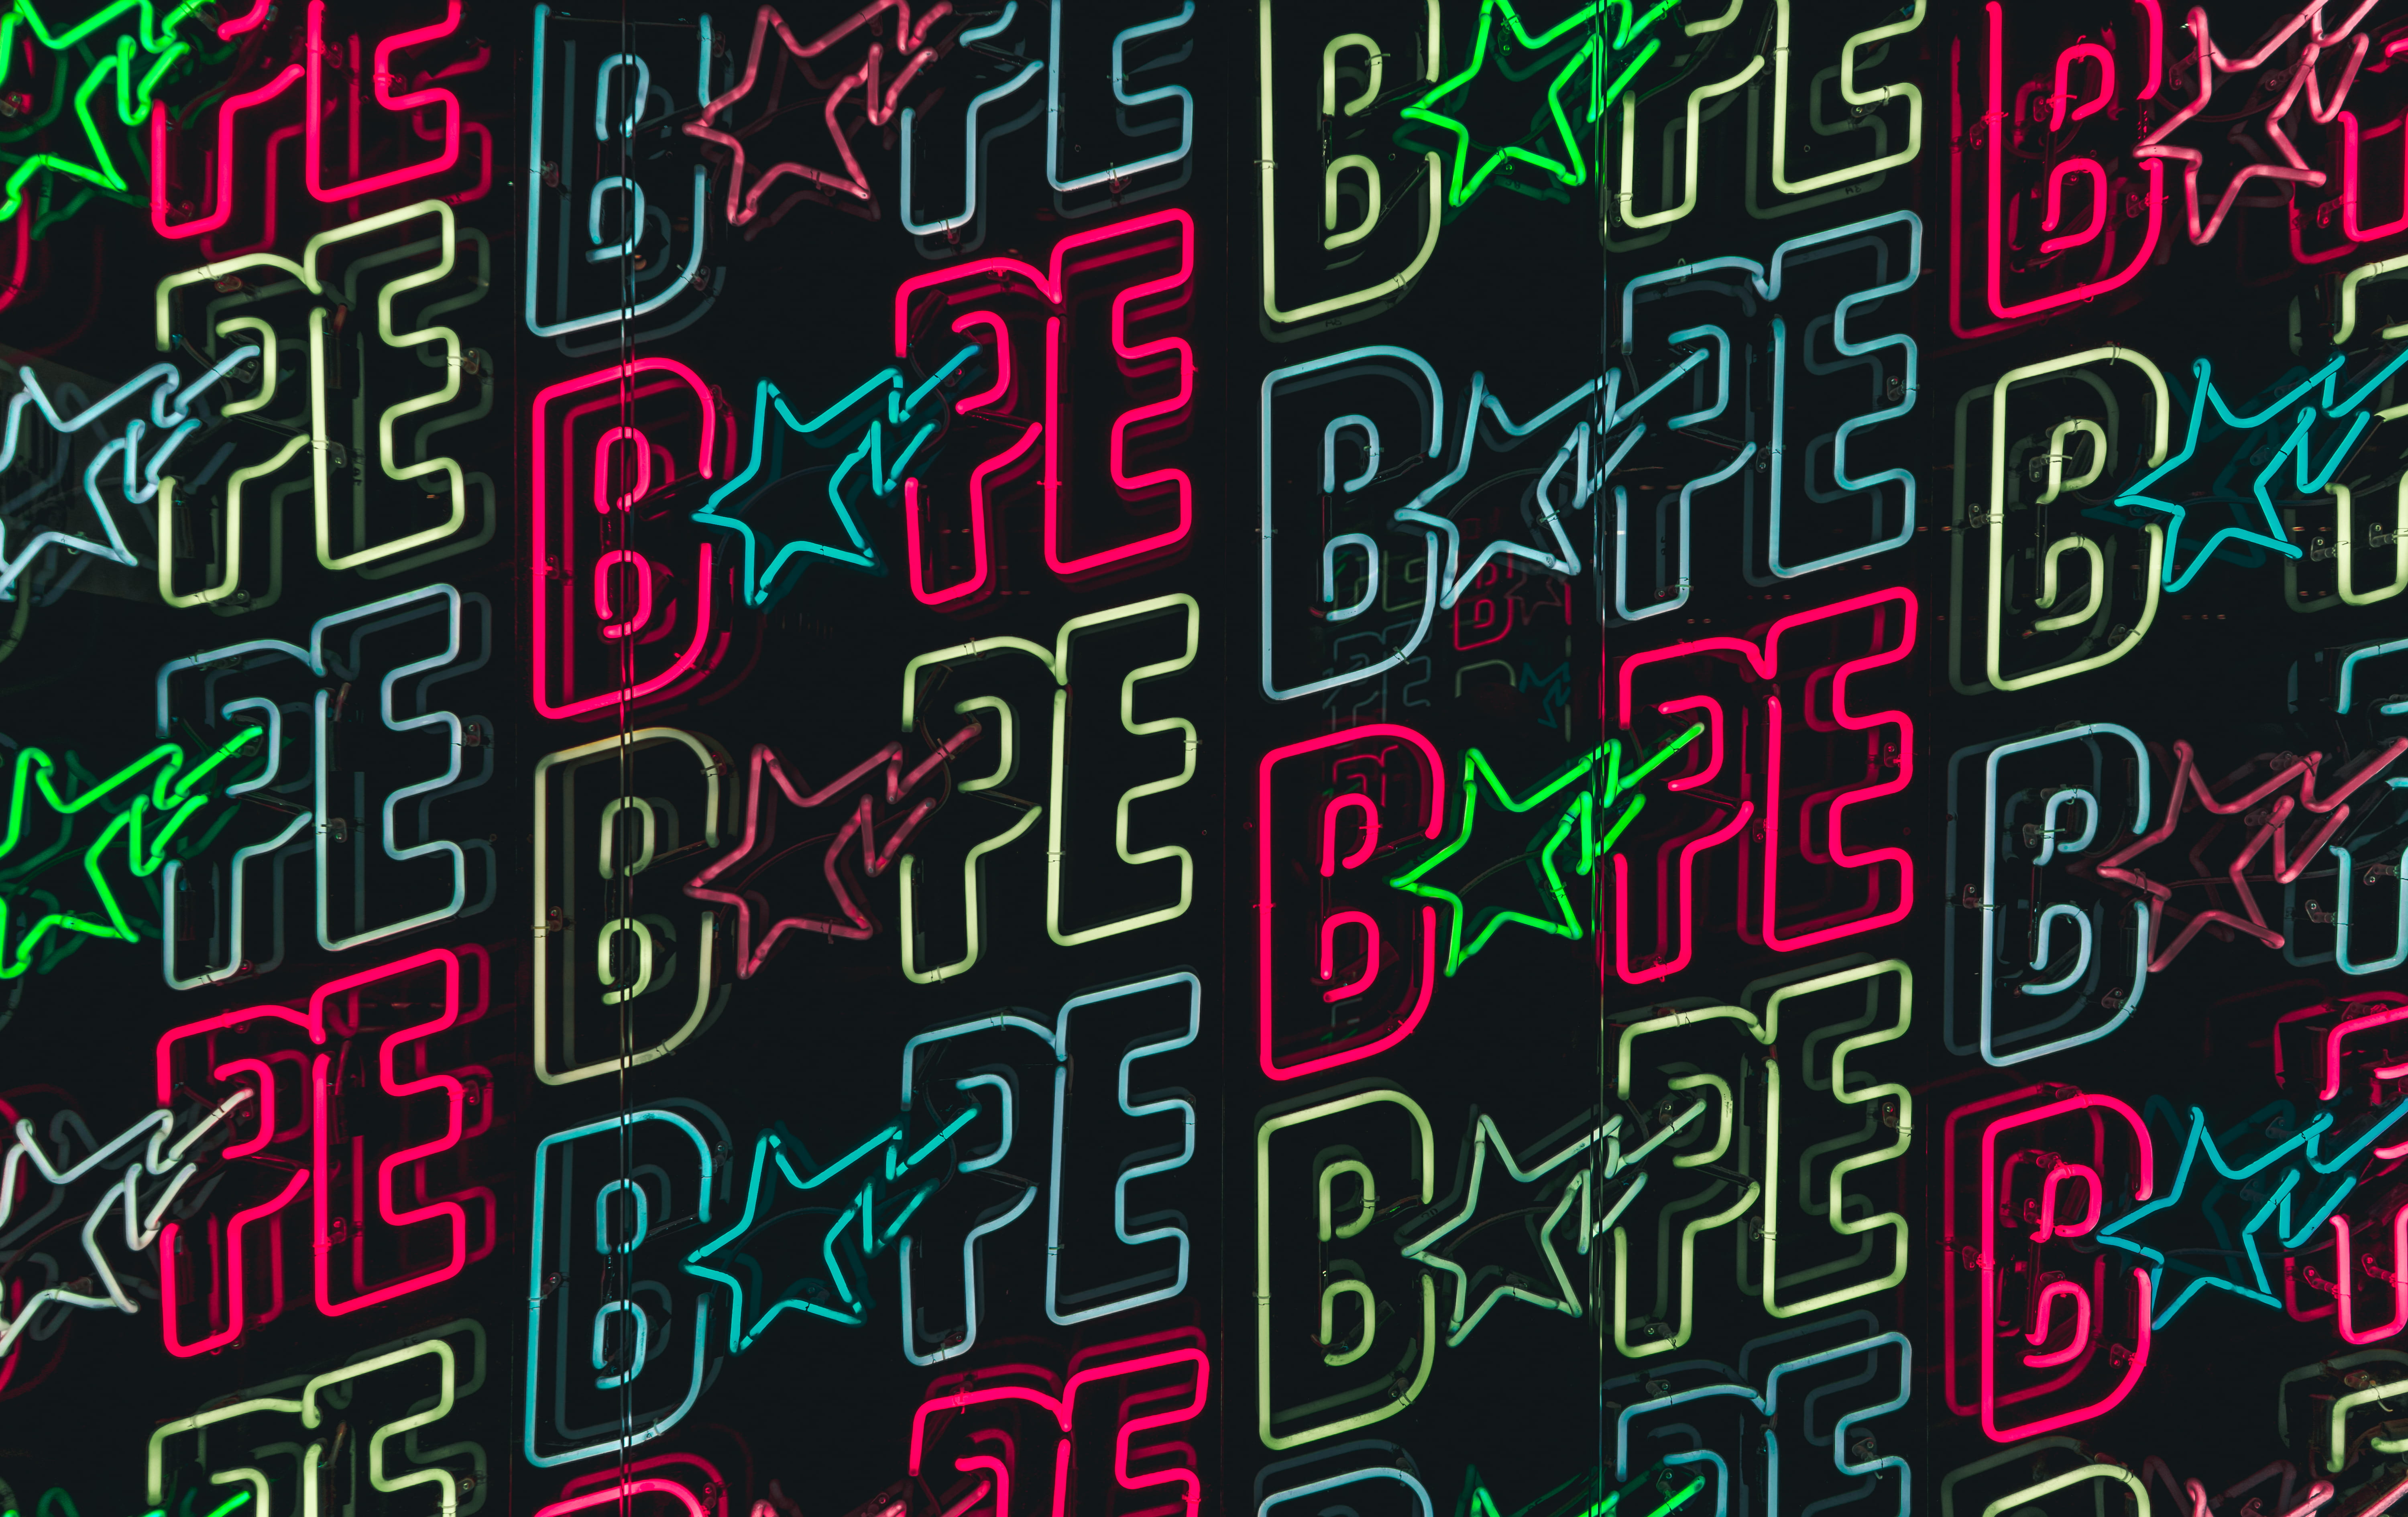 Bape neon logo wallpaper, Bope print digital wallpaper, sign